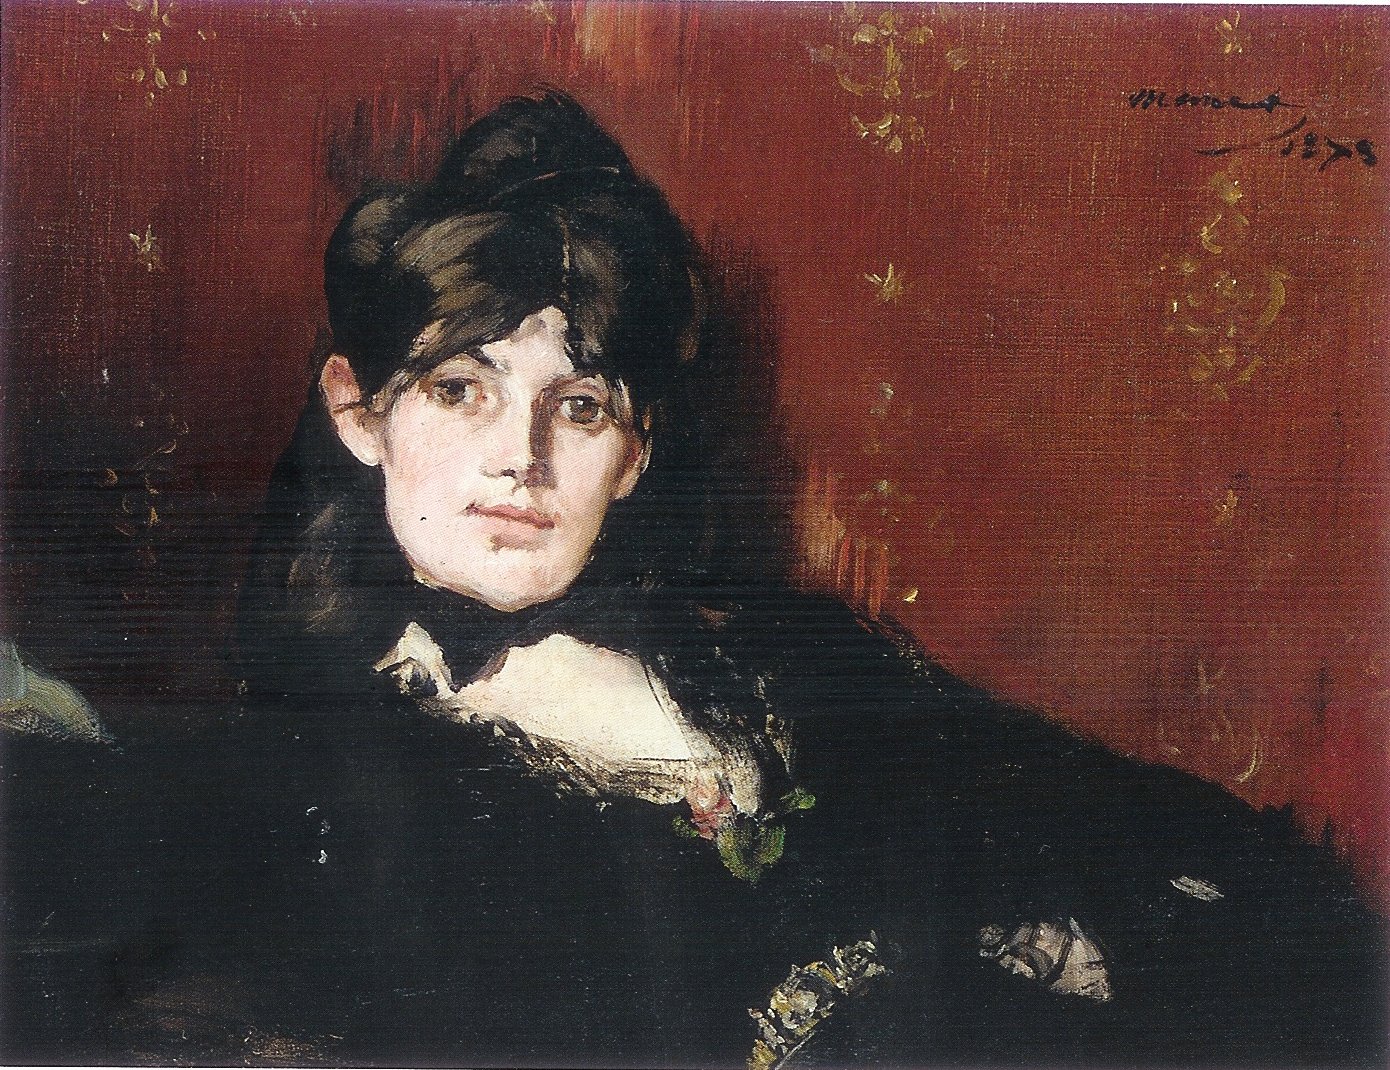 Edouard+Manet-1832-1883 (115).jpg